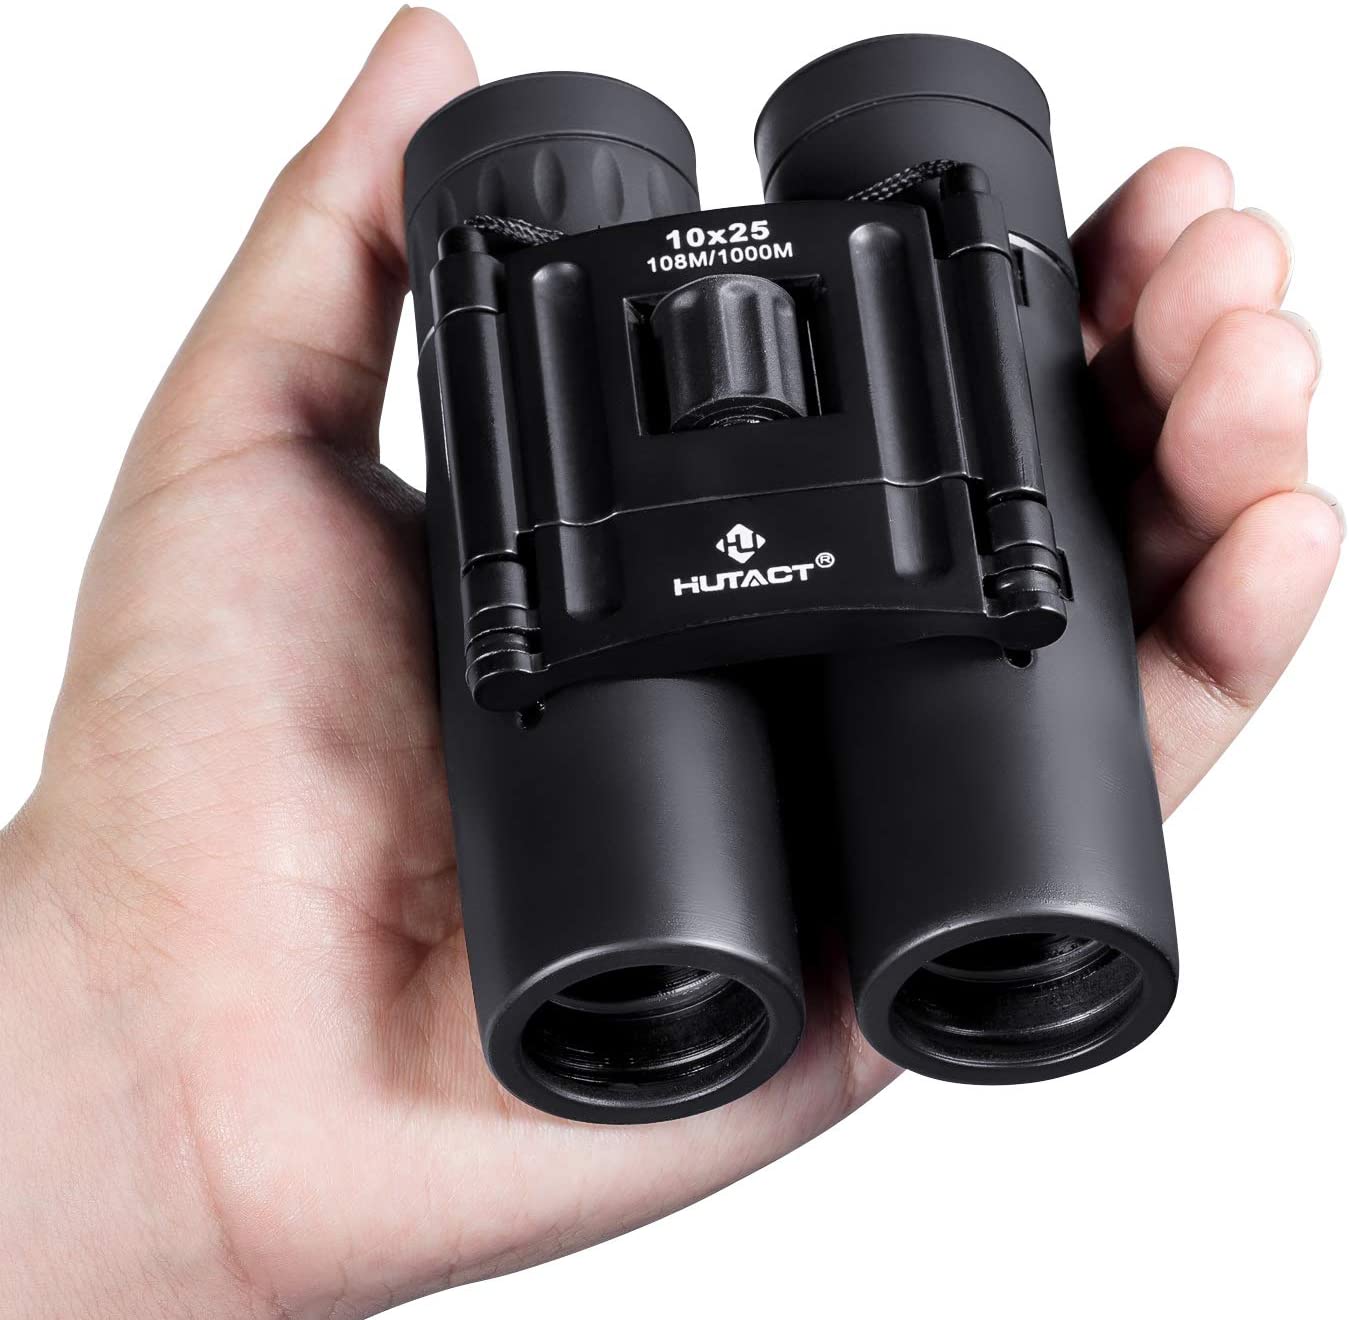 HUTAC Compact Mini Binoculars